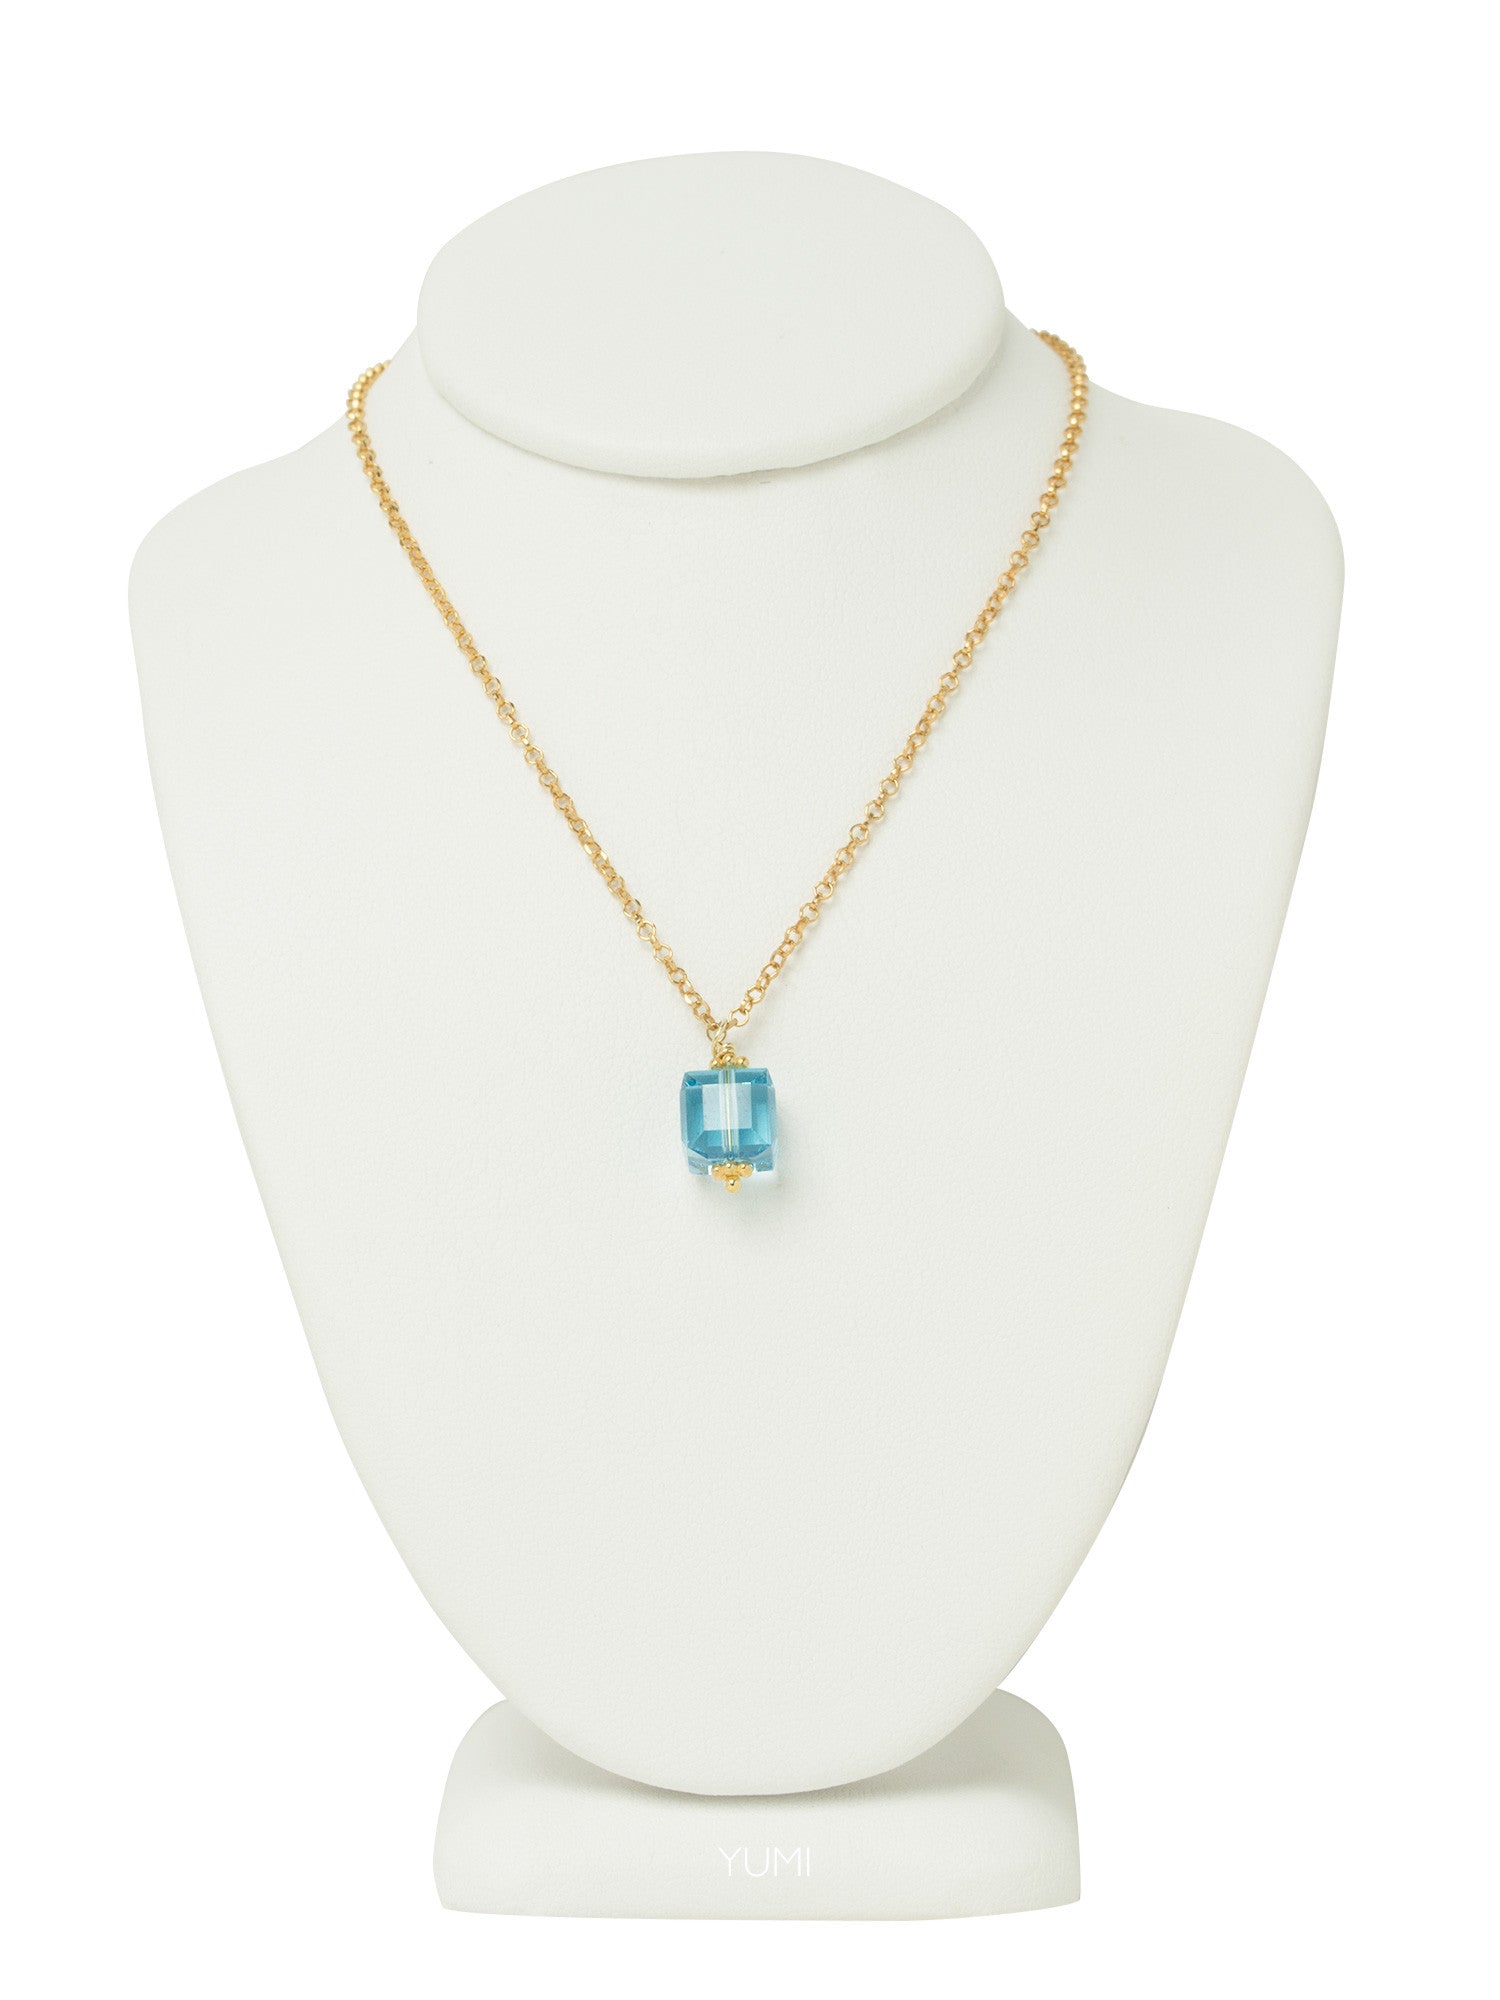 March (Aquamarine) Birthstone Necklace Created with Zircondia® Crystals by  Philip Jones Jewellery